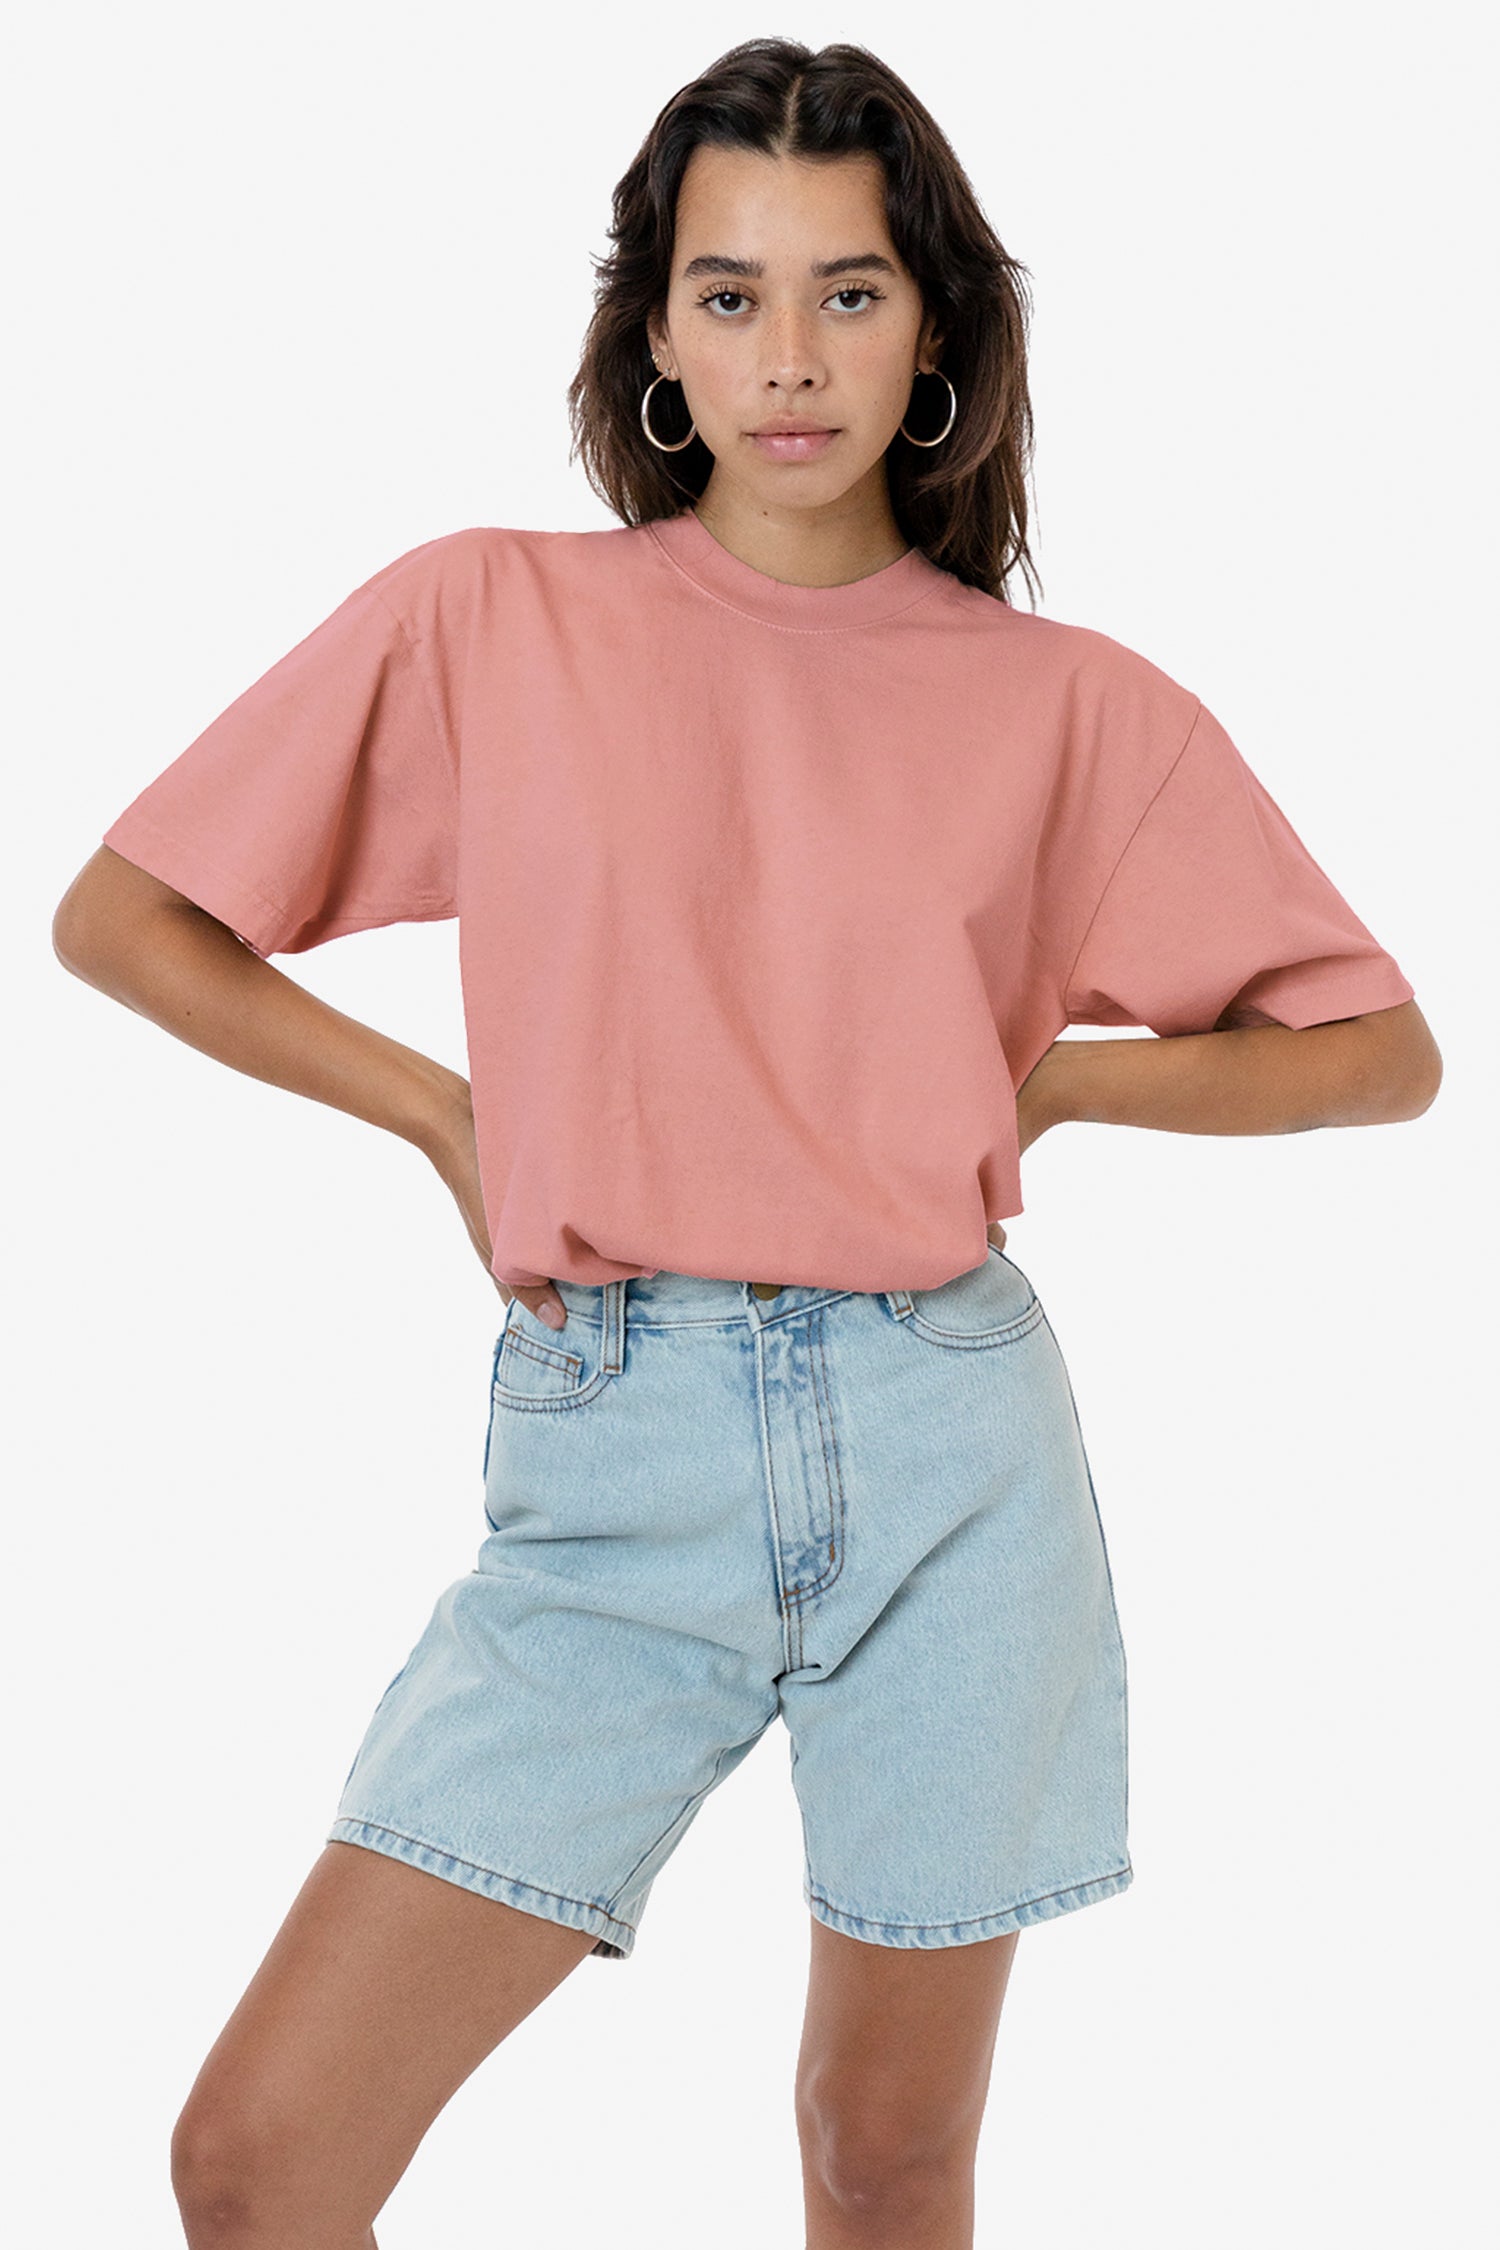 Los Garment Angeles Crew – The (Colors - Neck Apparel 1801 1 T-Shirt 3) Dye of 6.5oz